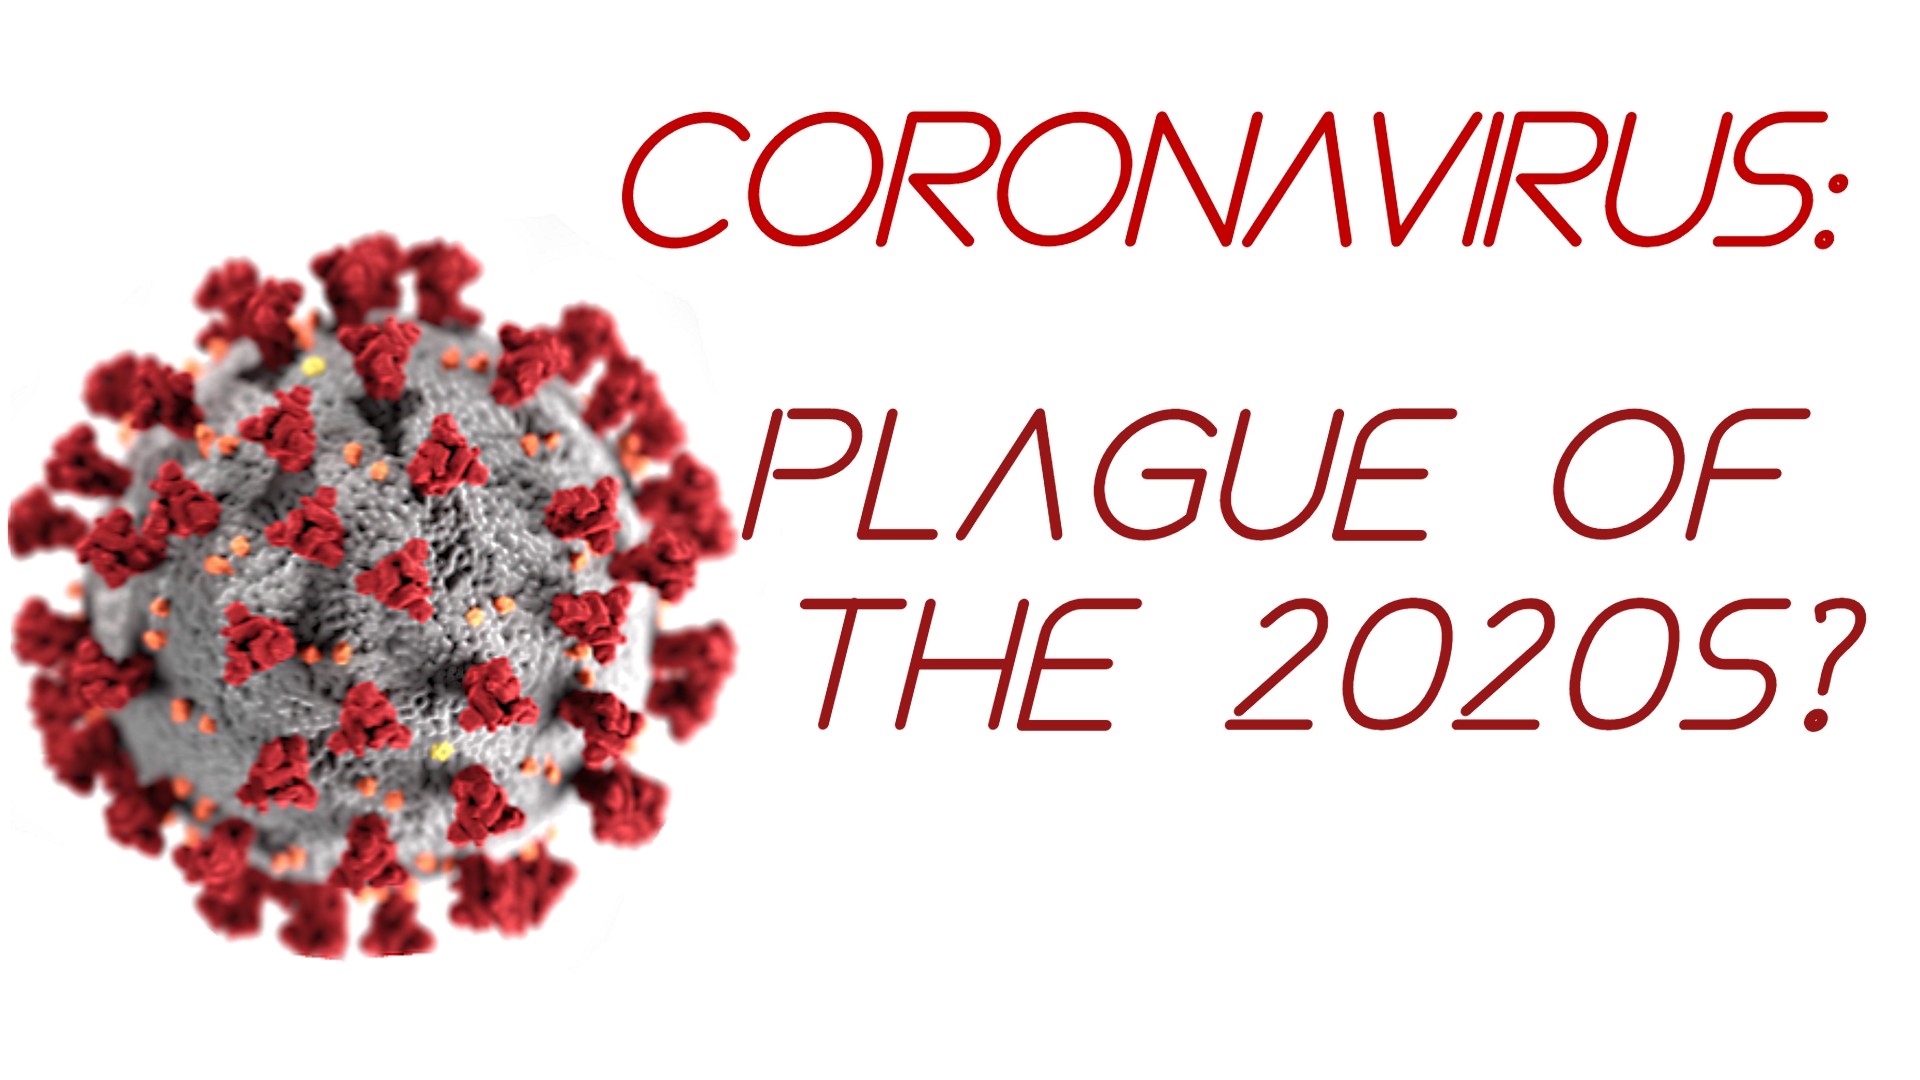 Coronavirus: Plague of the 2020s?